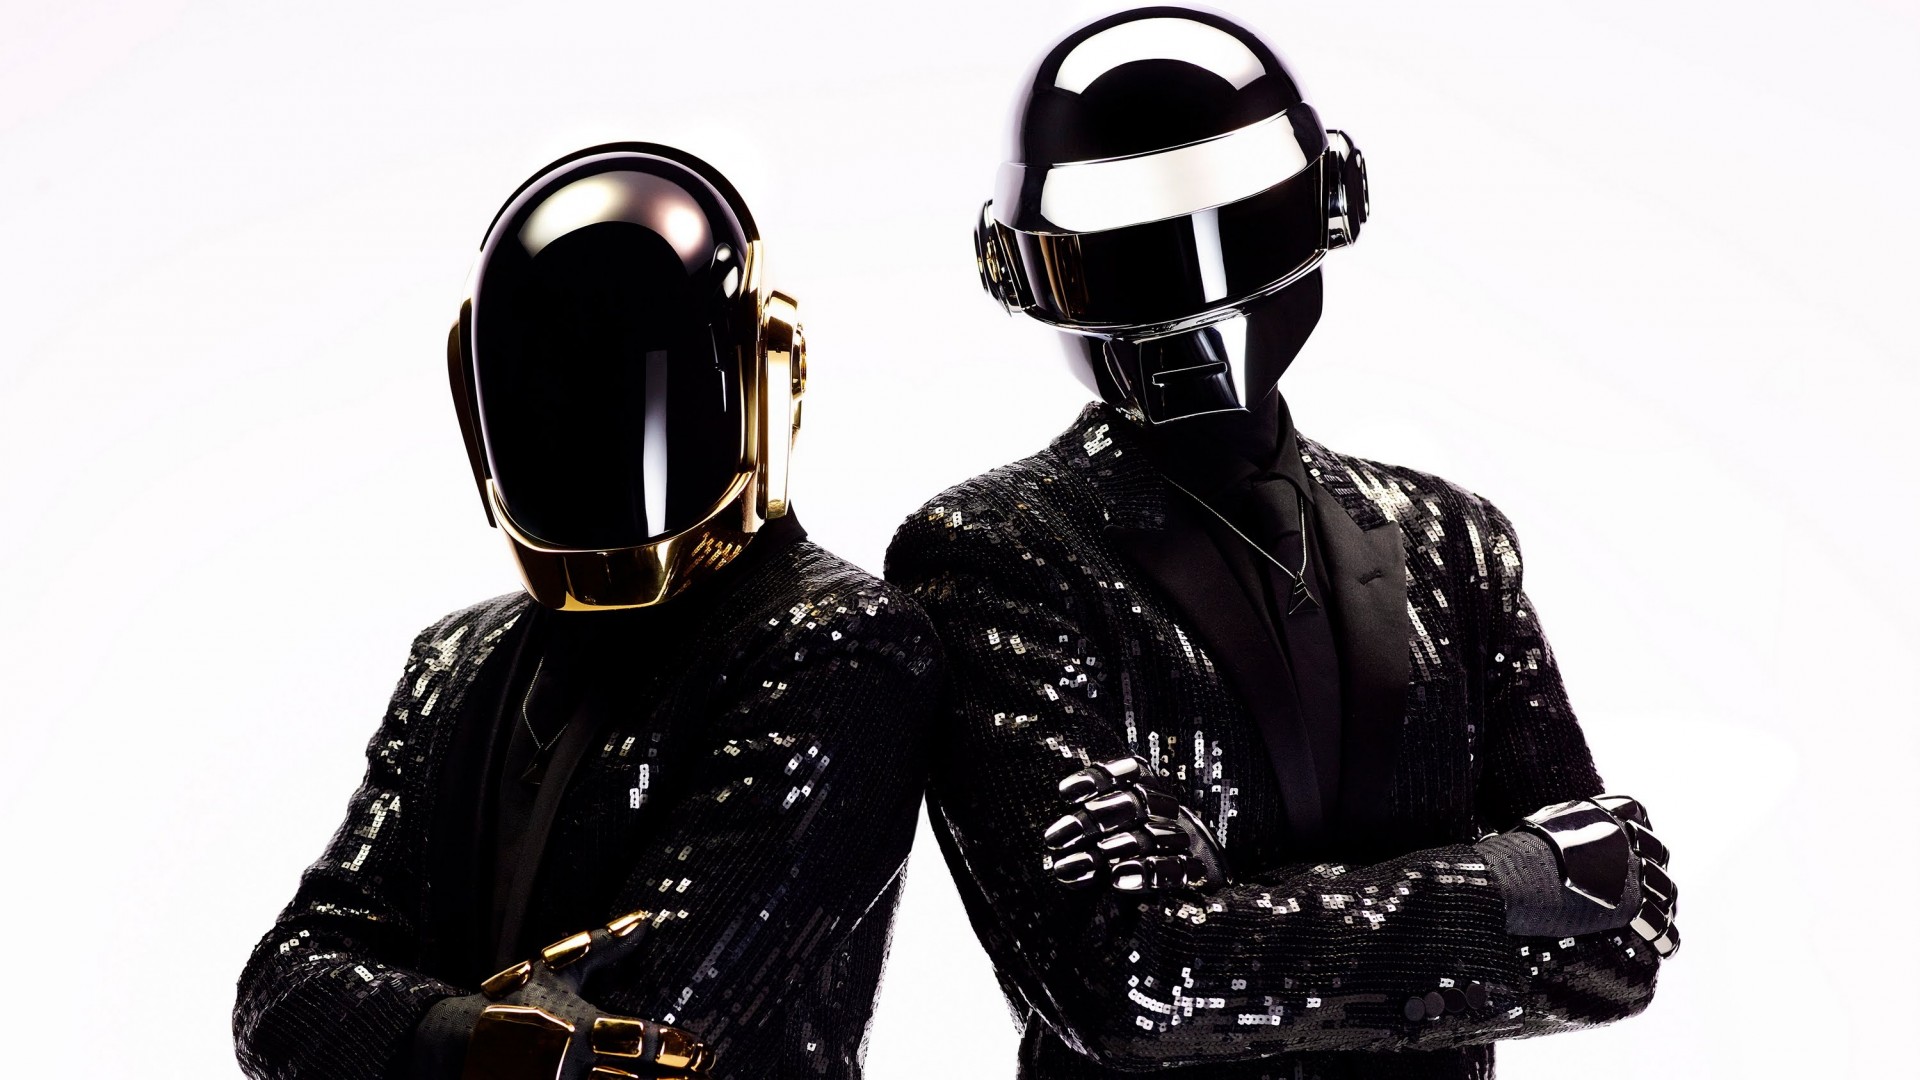 Daft Punk: 25 años reinventando la música disco. Cusica Plus.